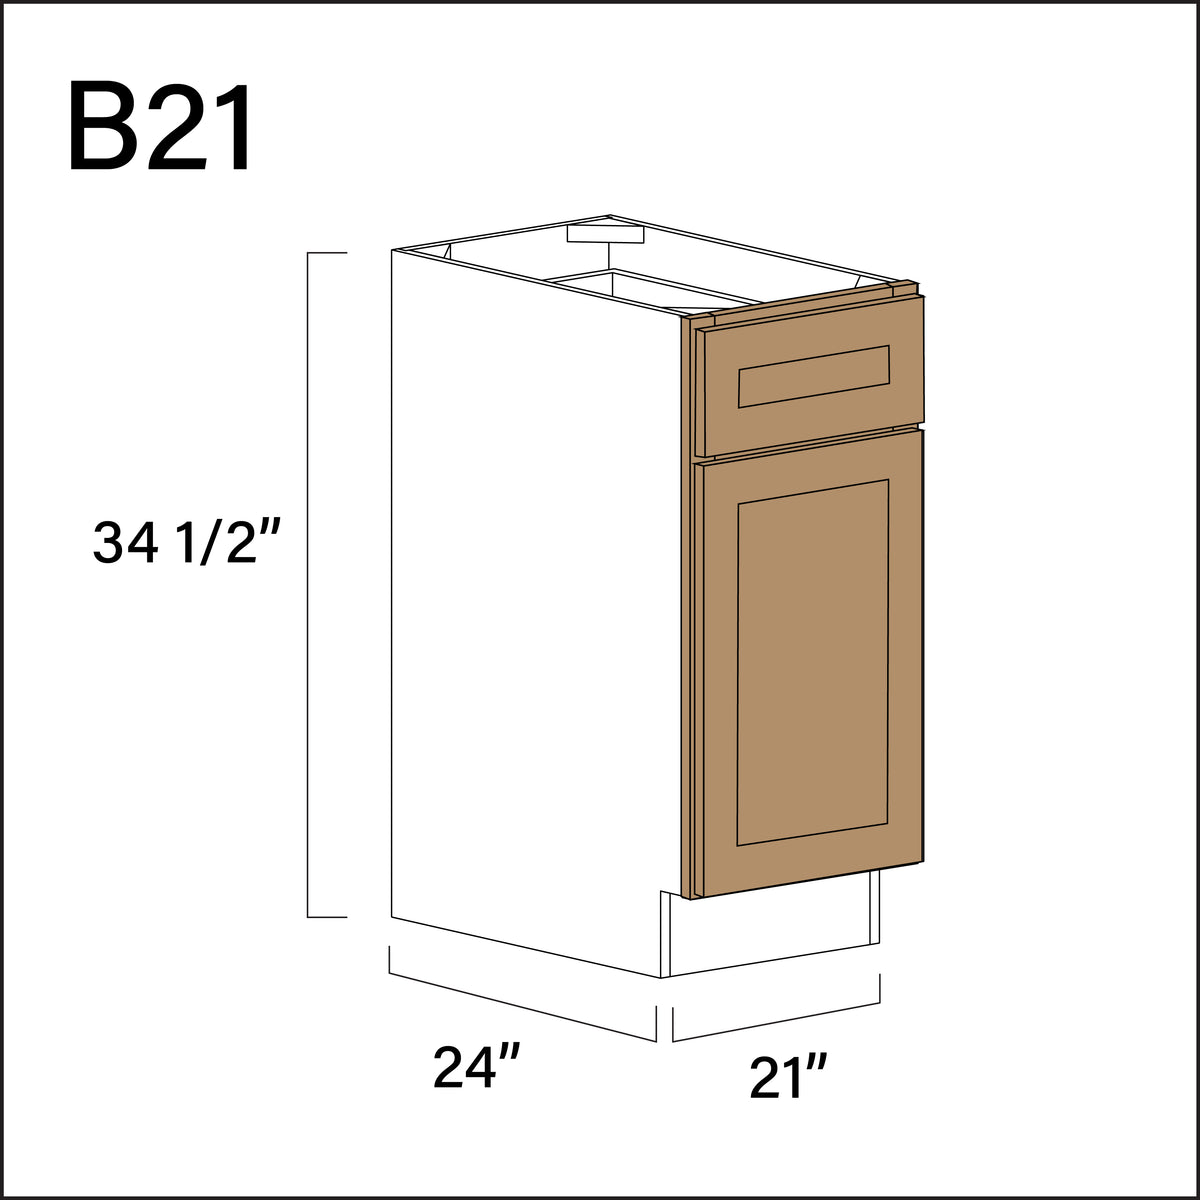 Alton Iced Mocha 1 Drawer 1 Door Kitchen Base Cabinet - 21" W x 34.5" H x 24" D